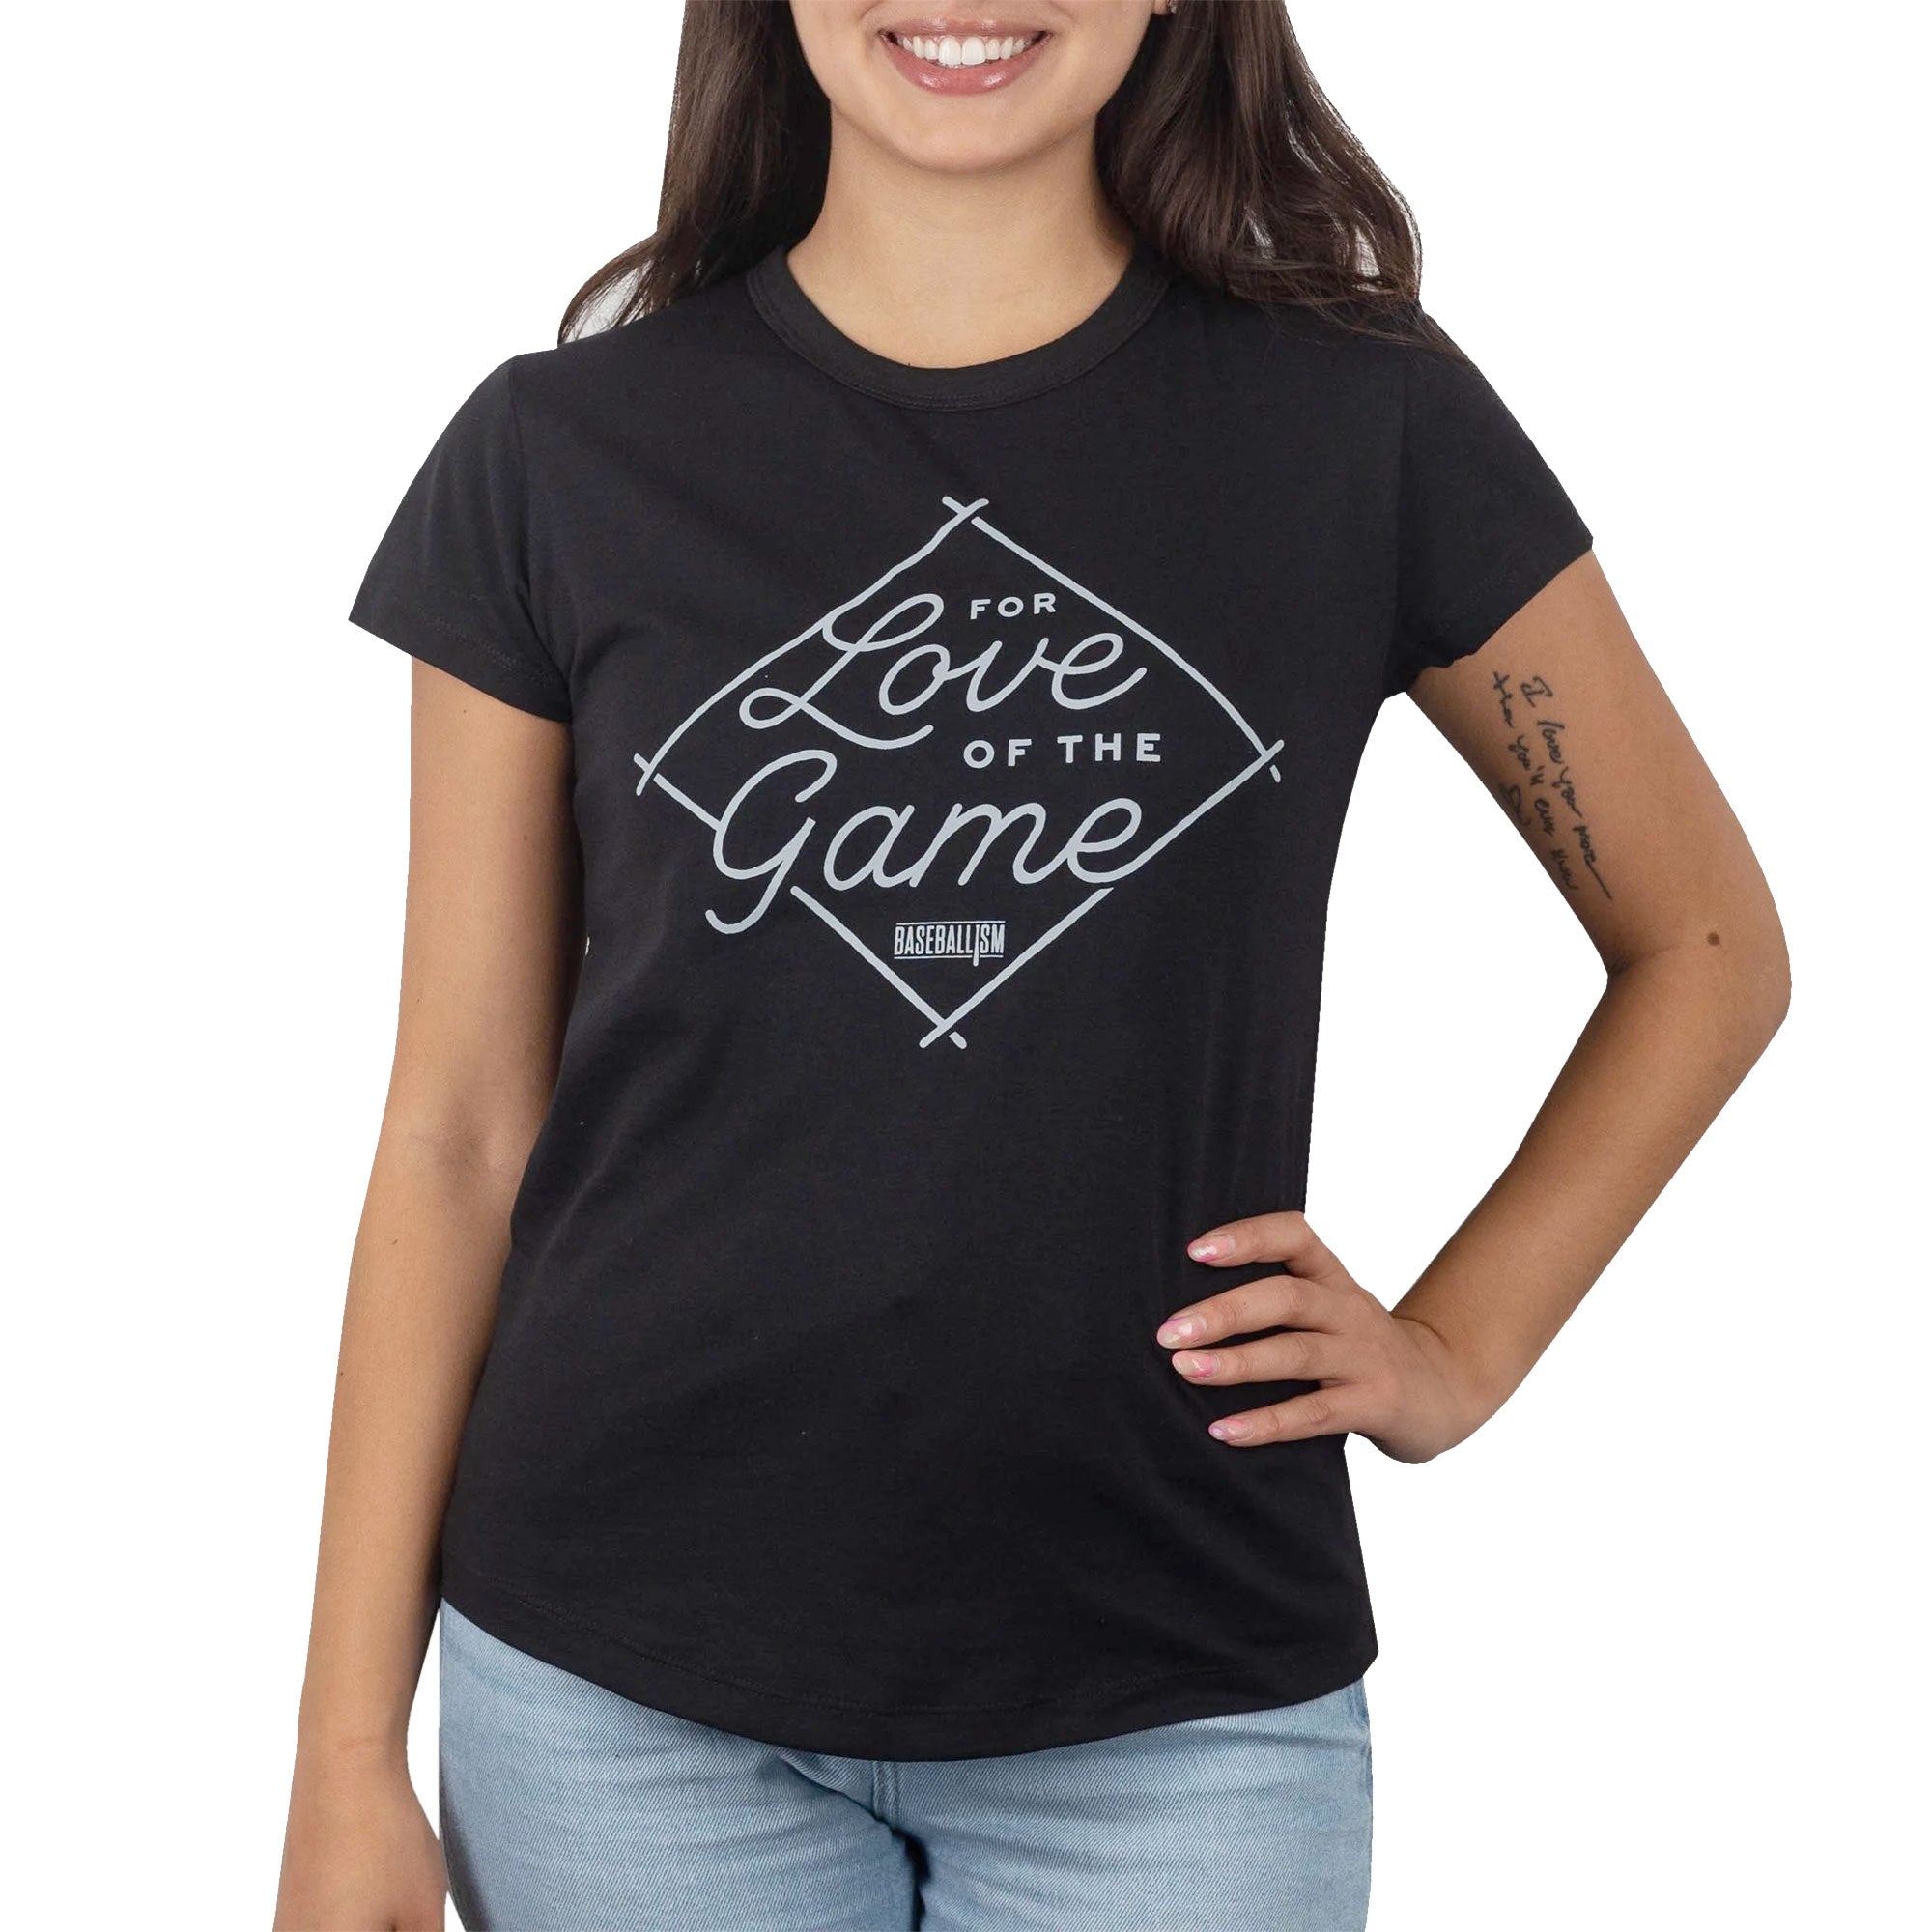 Baseballism Women's For the Love of the Game T-Shirt - Black